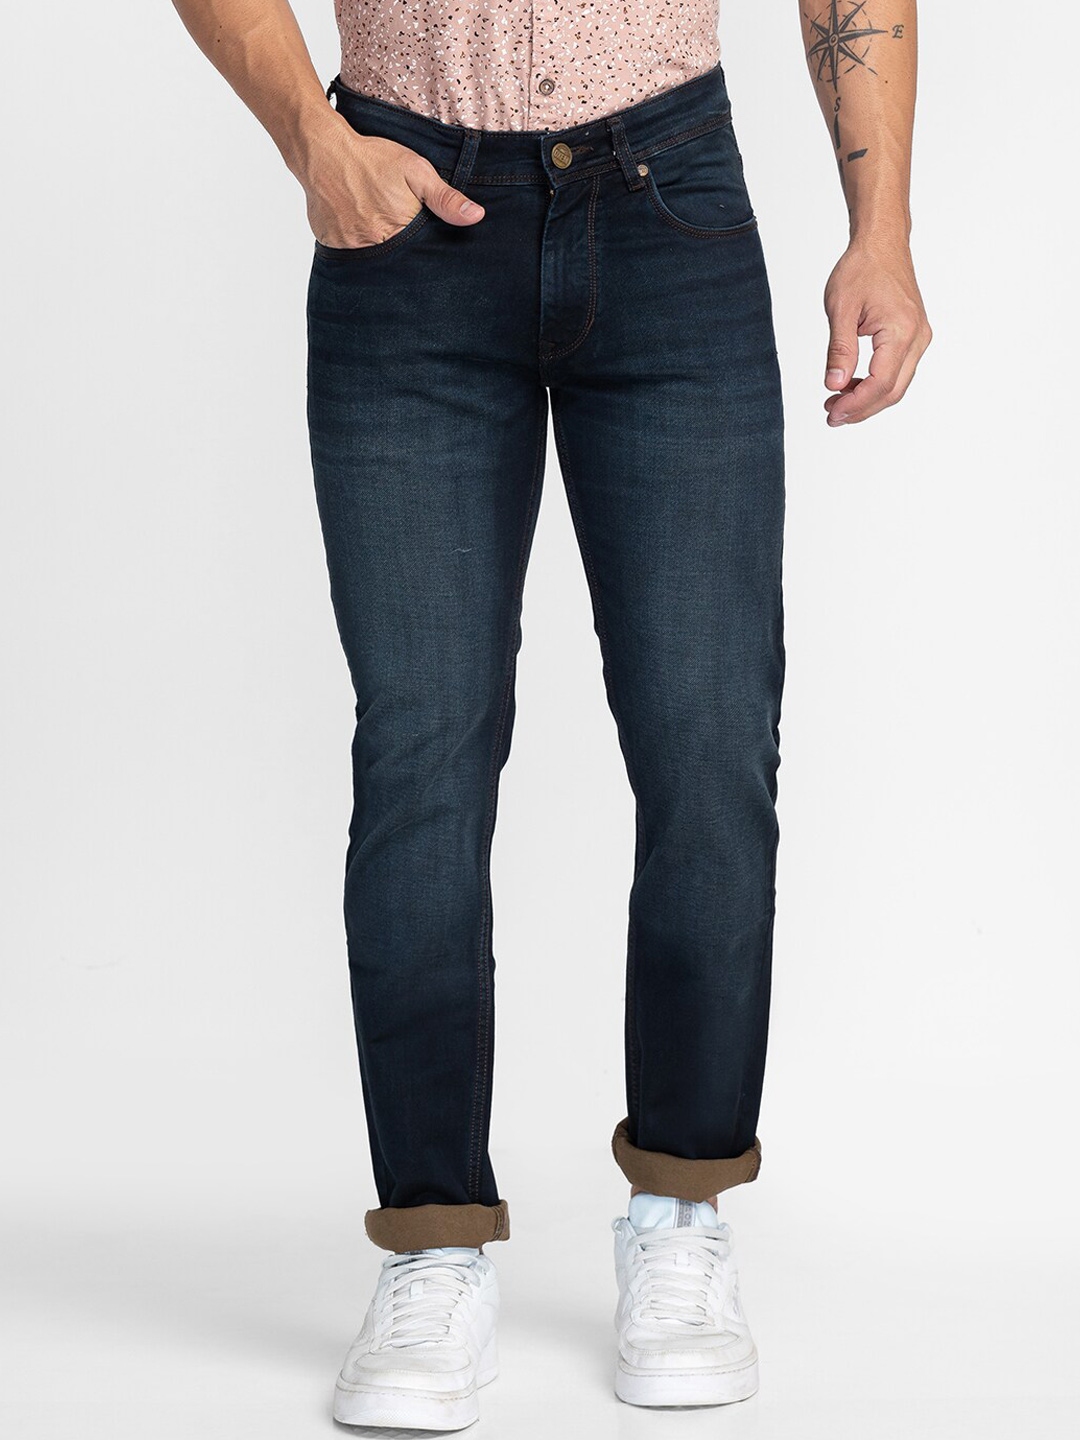 Buy Oxemberg Men Lean Slim Fit Light Fade Jeans - Jeans for Men ...